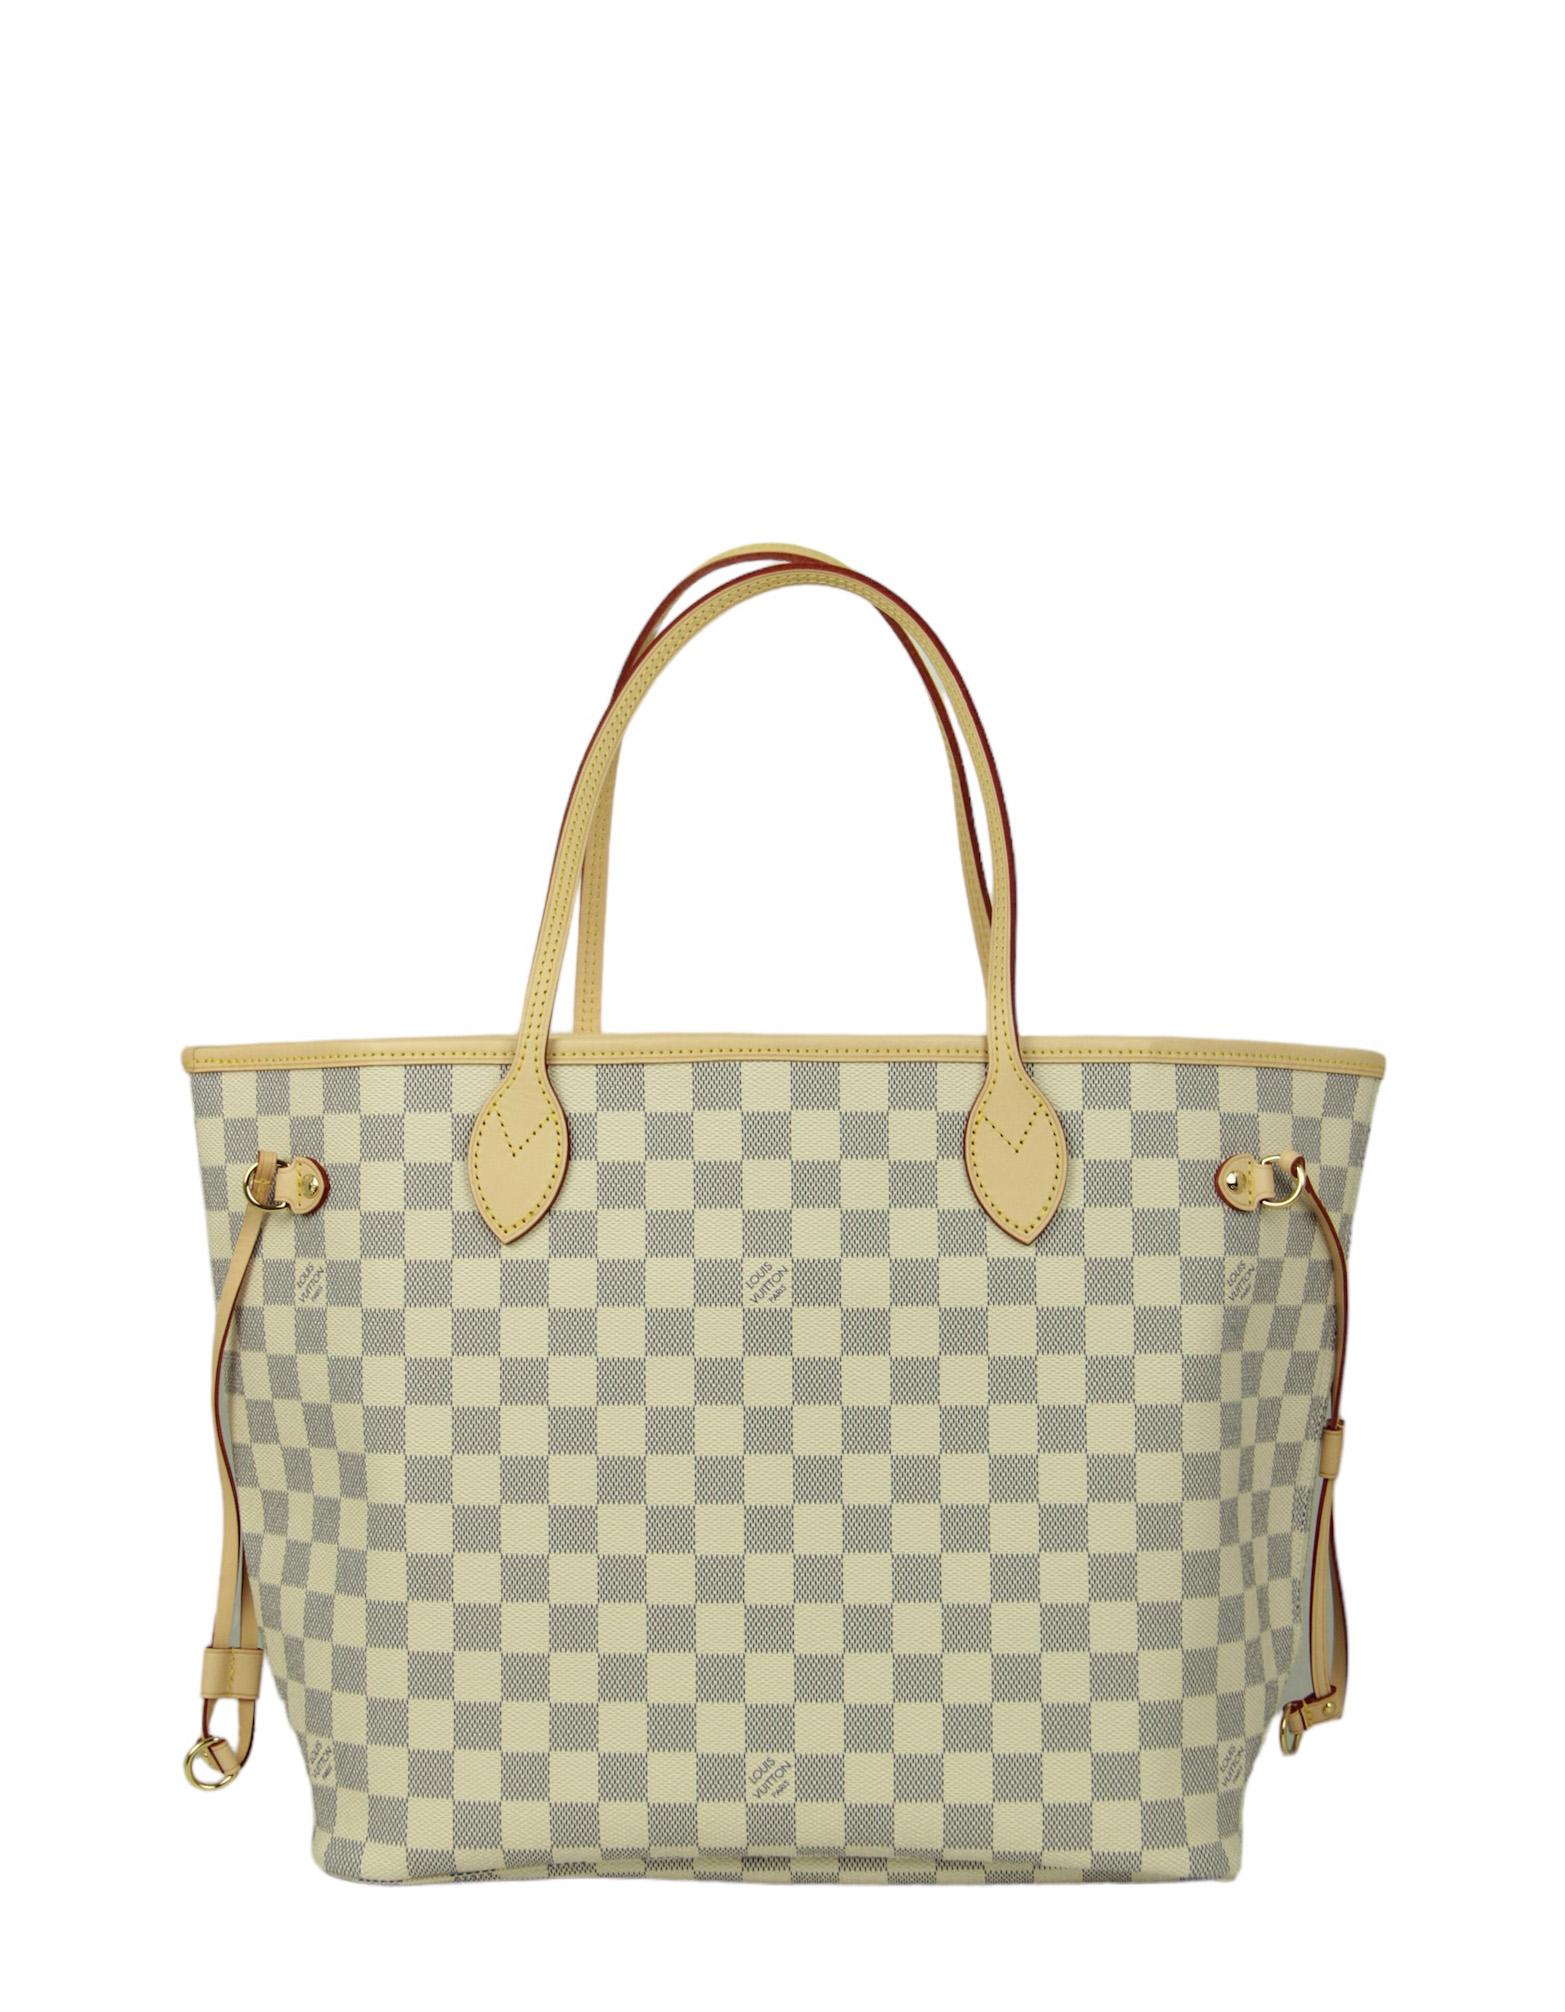 Women's Louis Vuitton Damier Azur Neverfull MM Tote Bag For Sale